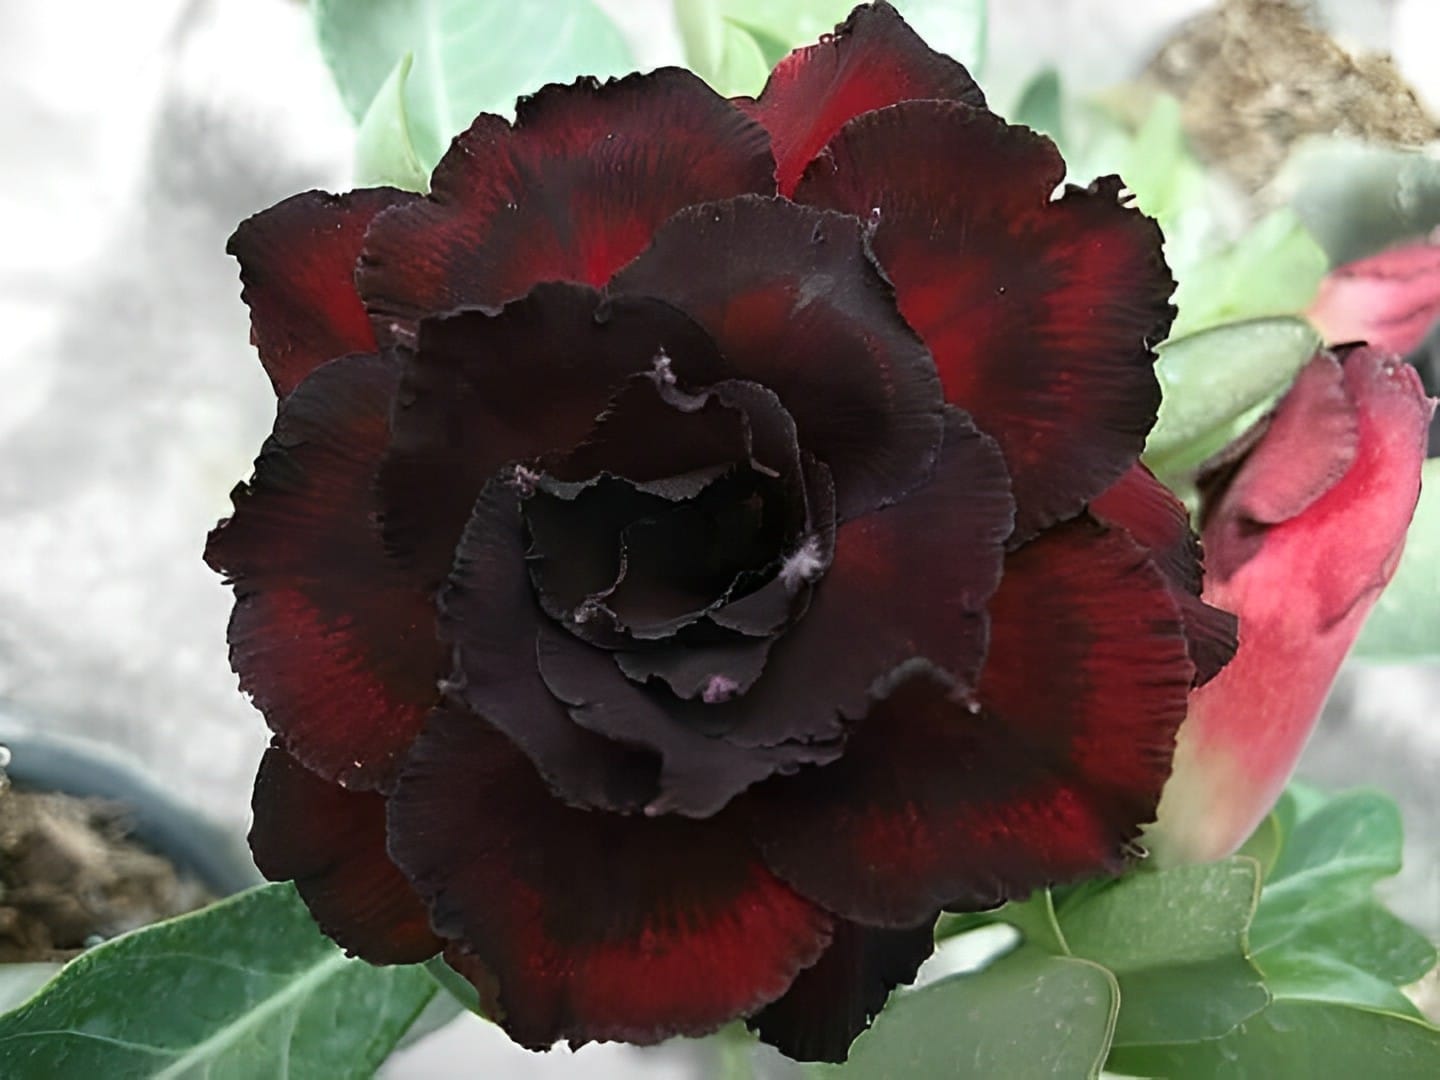 Adenium (Desert Rose) 'Good Night' for sale